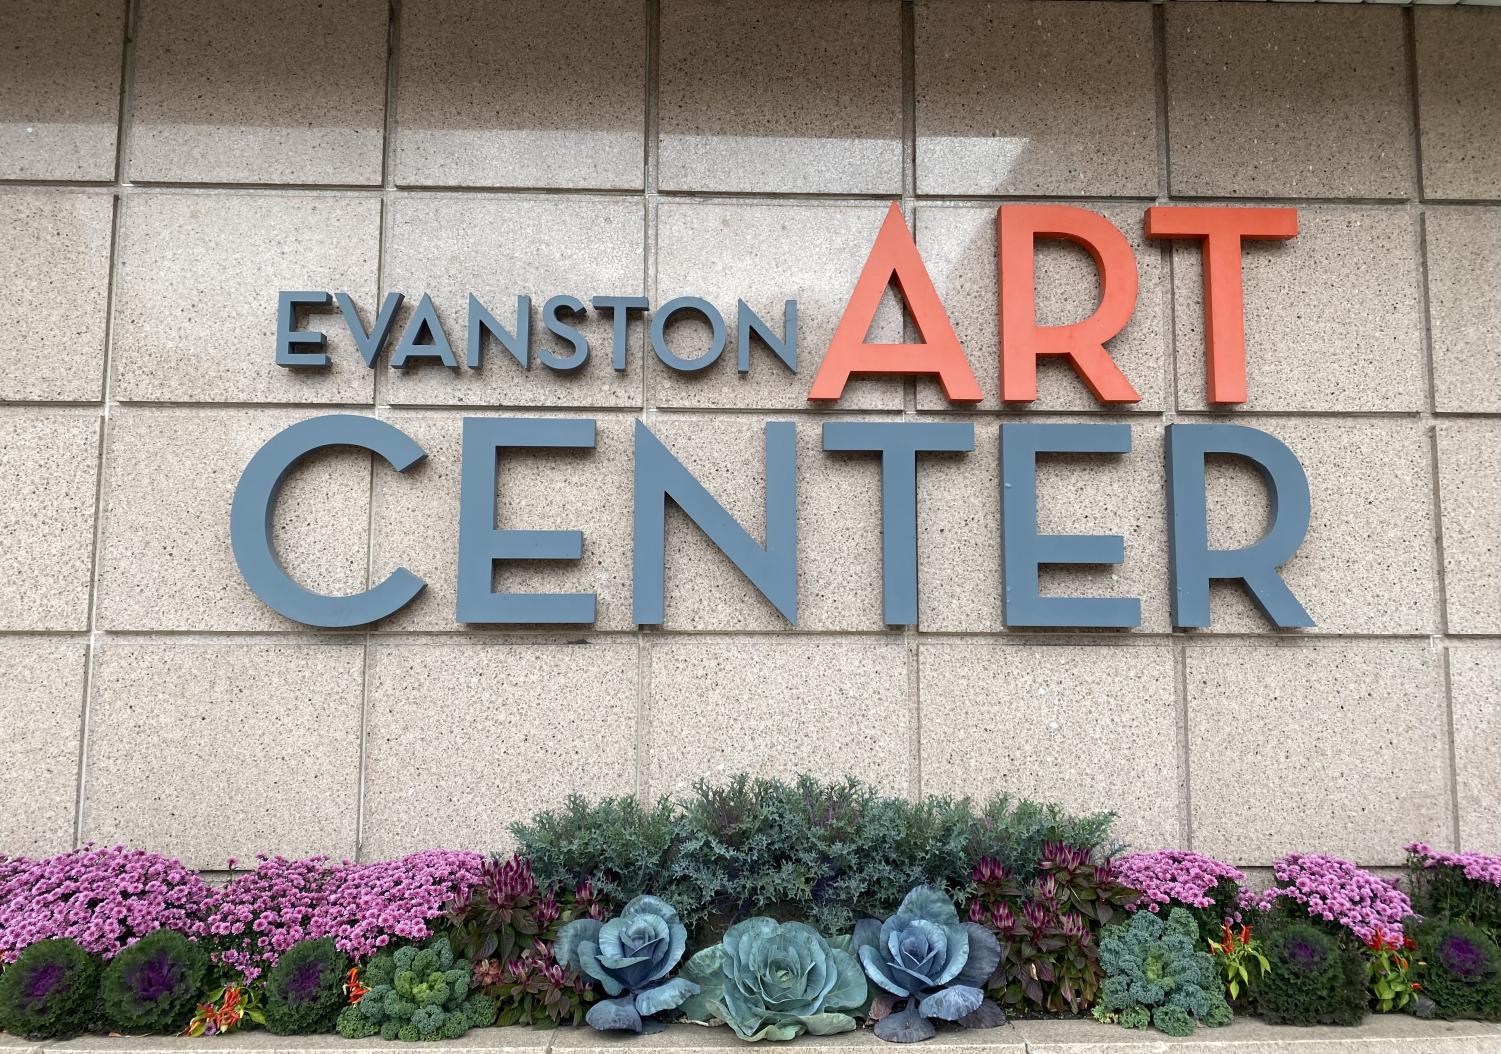 The+outside+of+the+Evanston+Art+Center%2C+with+a+sign+reading+%E2%80%9CEvanston+Art+Center%E2%80%9D+above+plants.